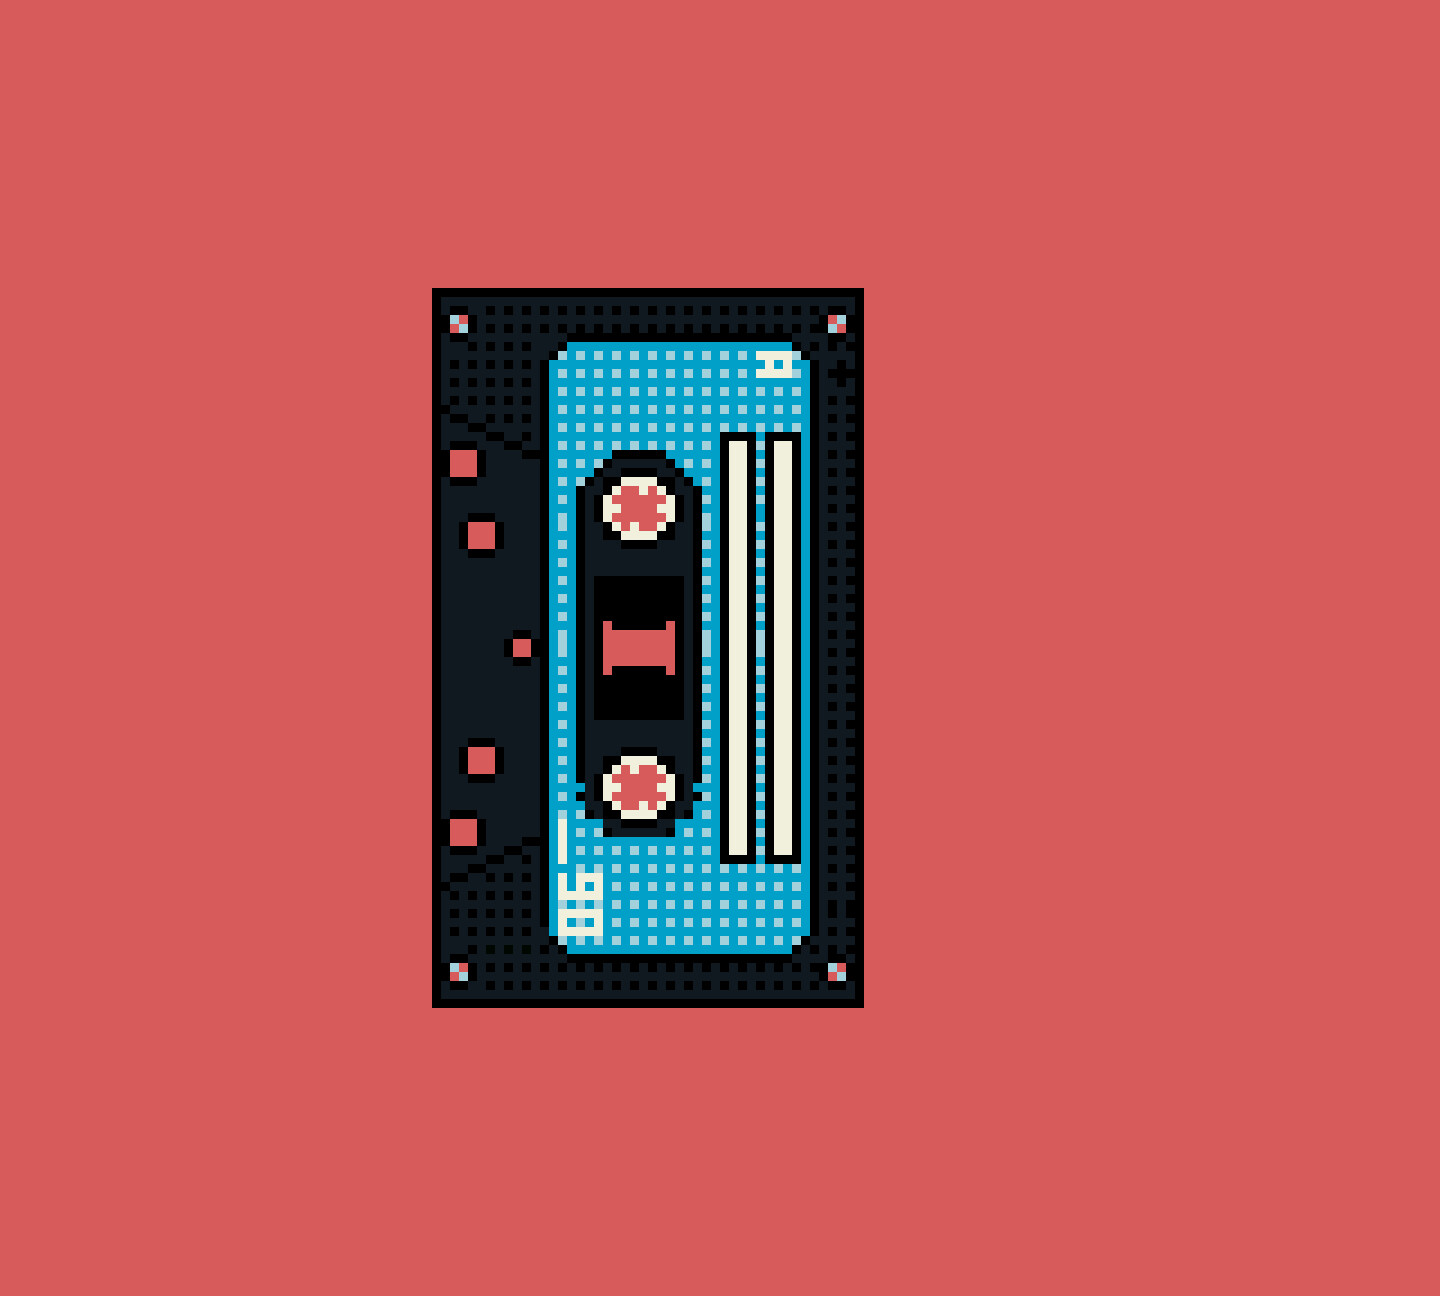 ArtStation - Casette tape breaking down - pixel animation